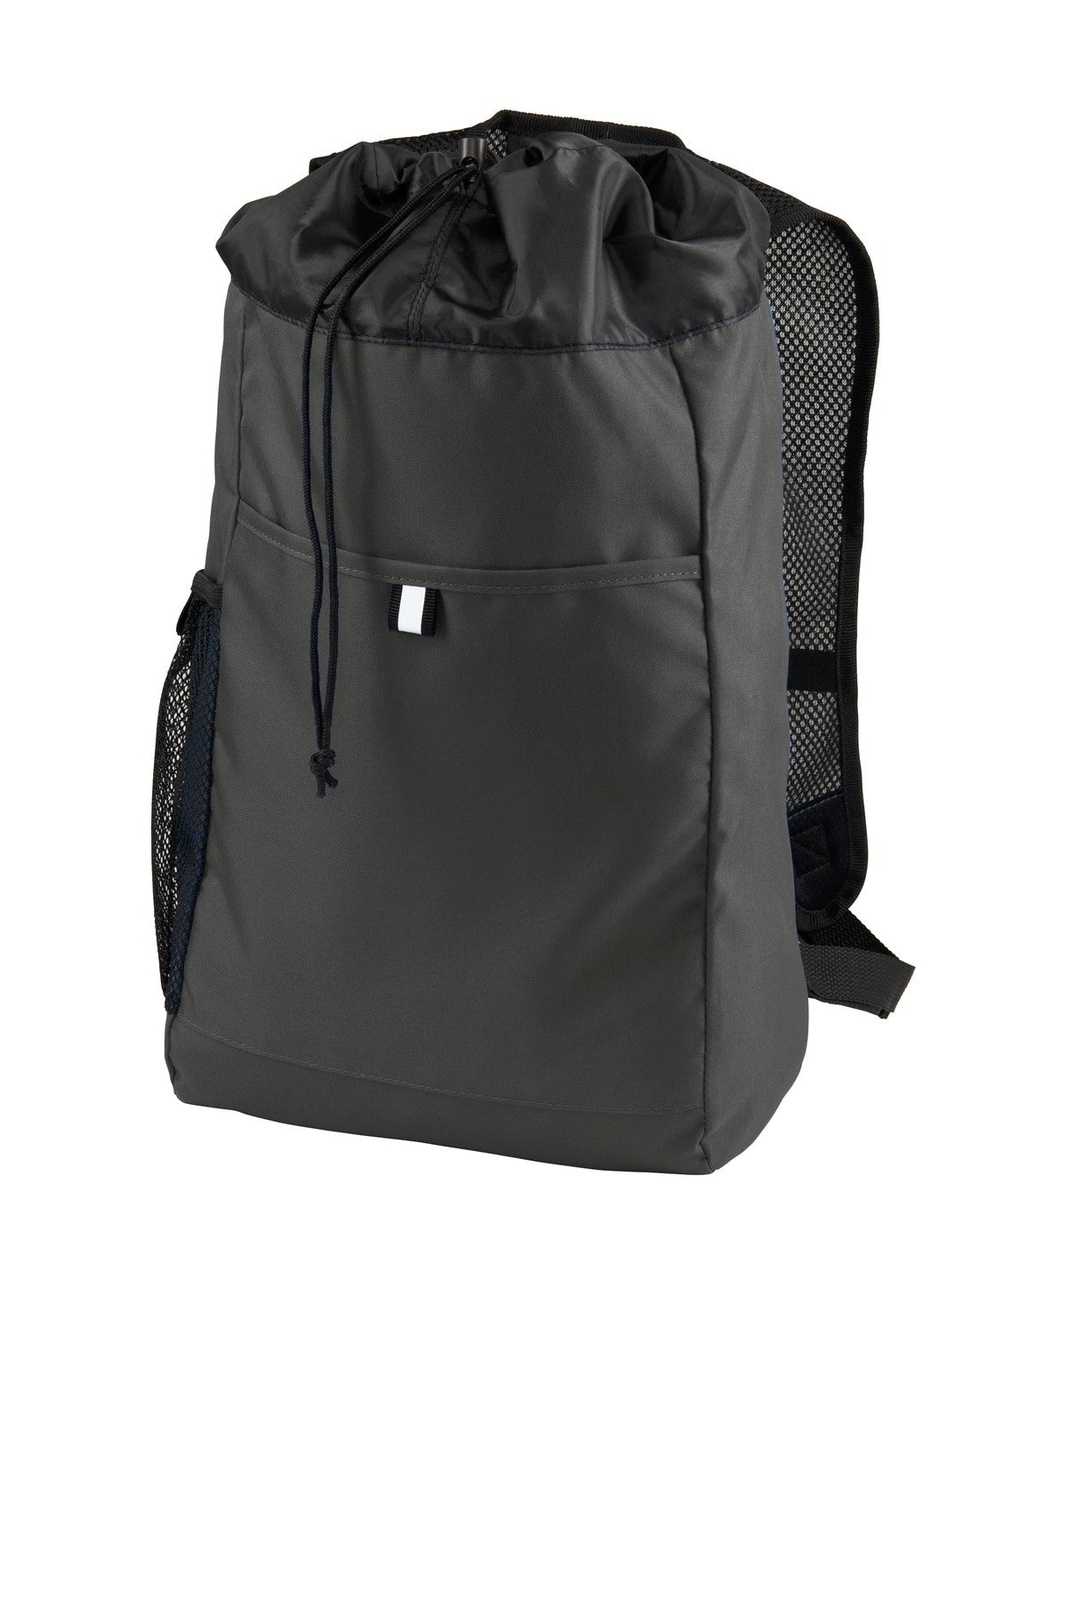 Port Authority BG211 Hybrid Backpack - Dark Charcoal Black - HIT a Double - 1